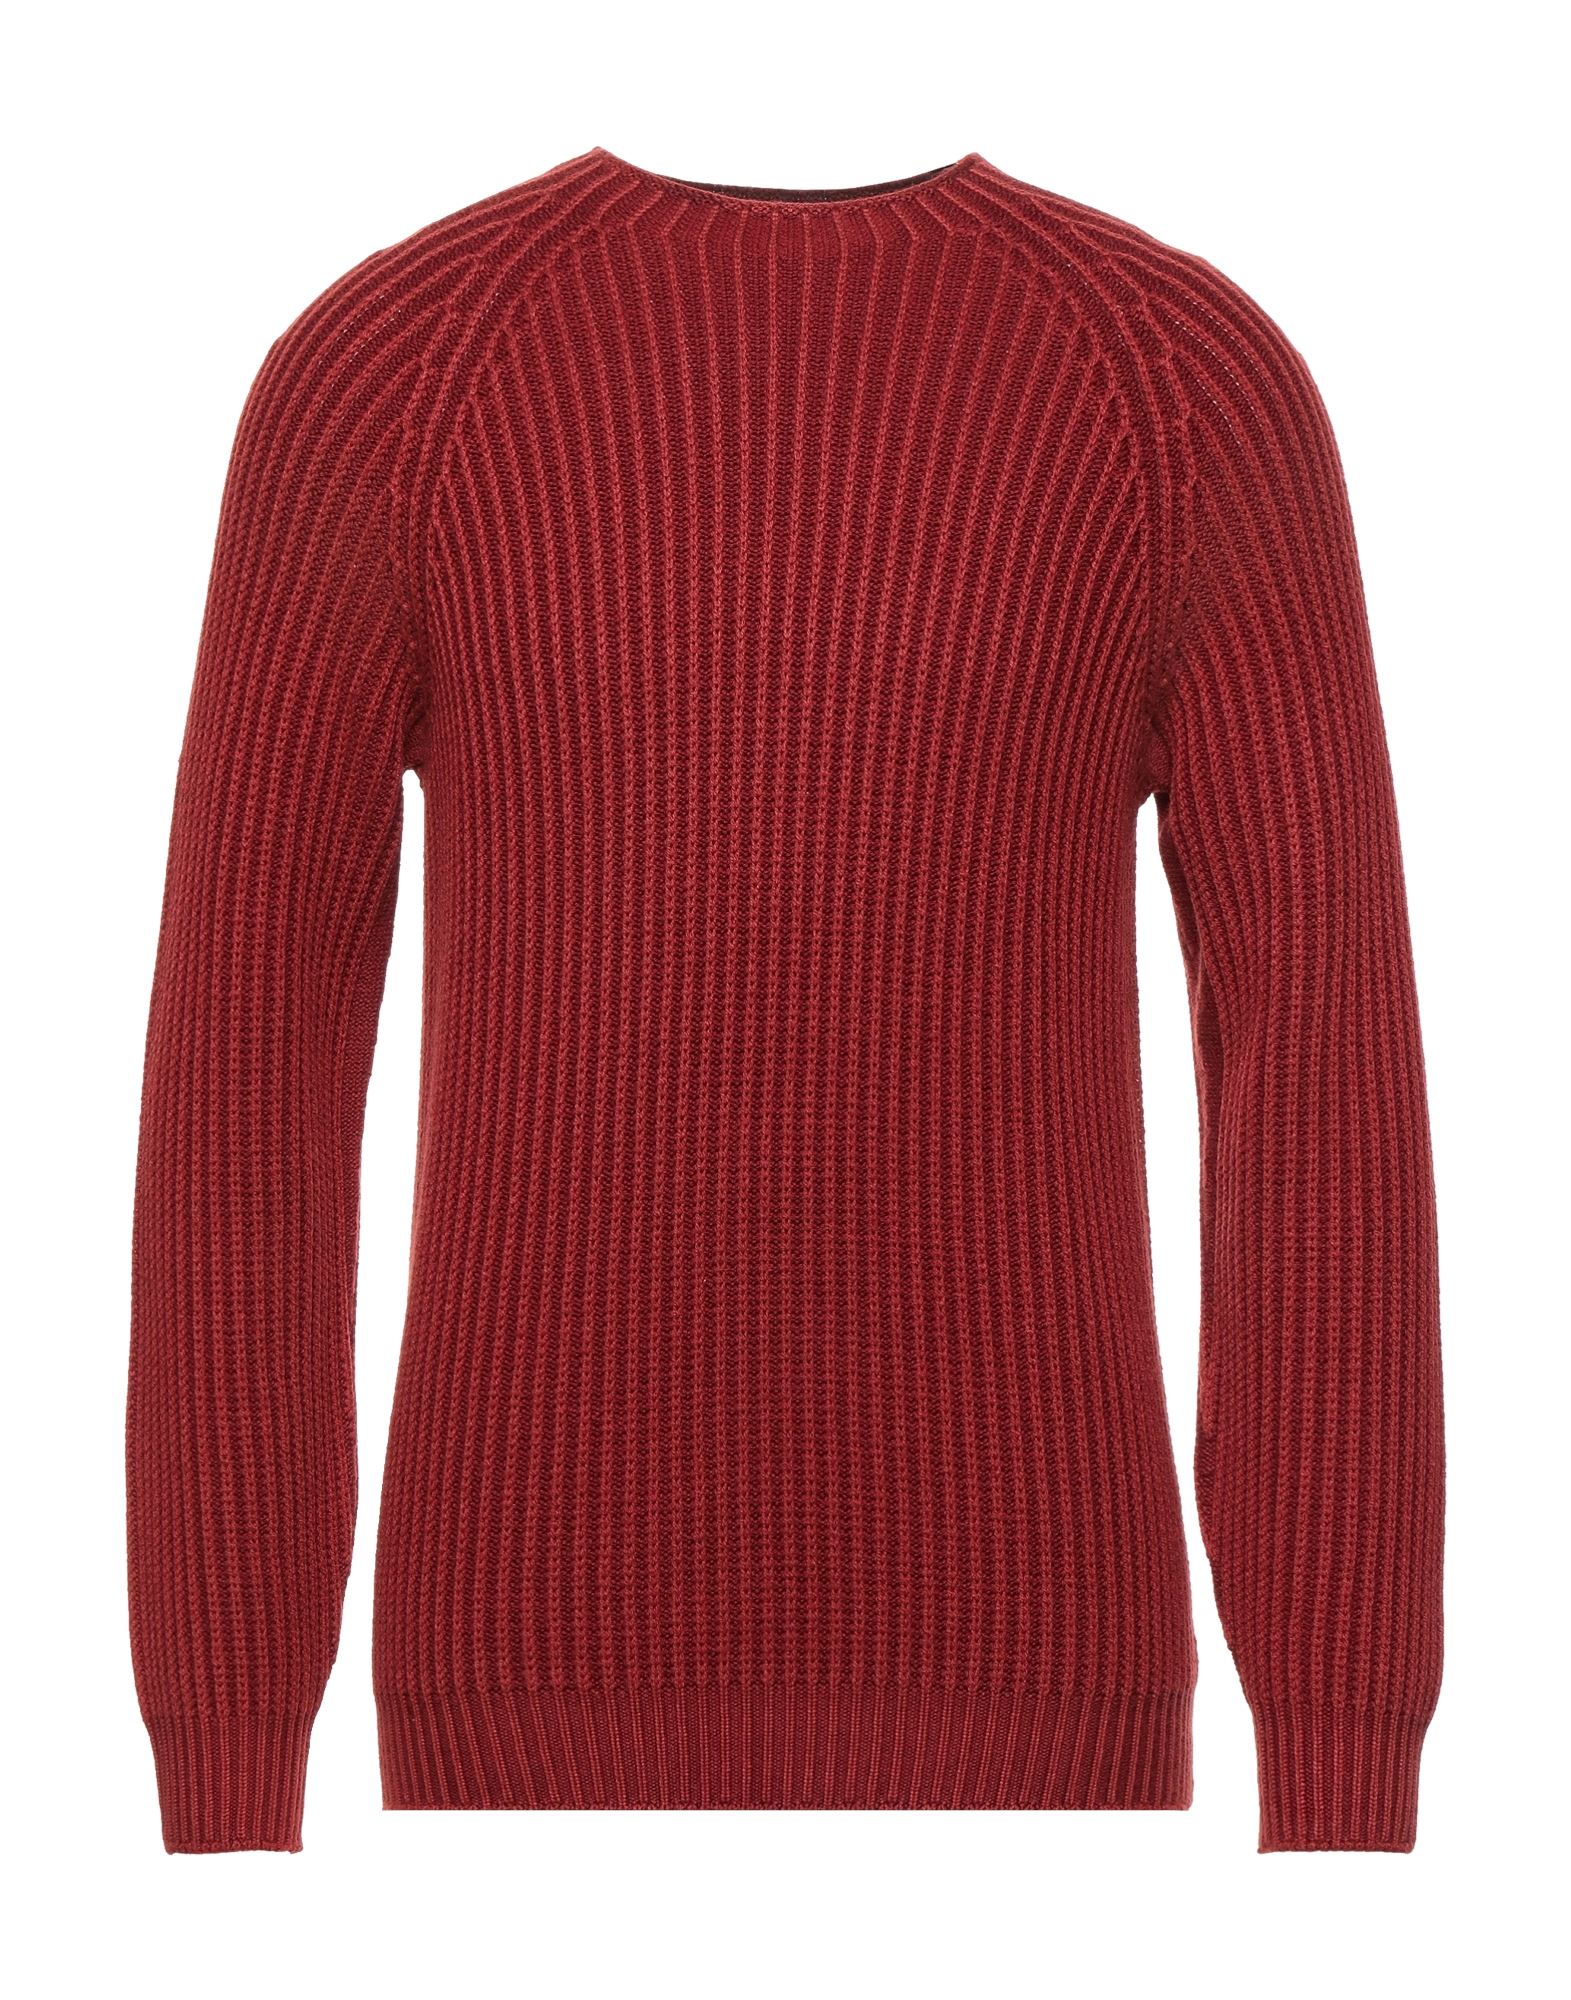 04651/a Trip In A Bag Man Sweater Brick Red Size Xxl Virgin Wool